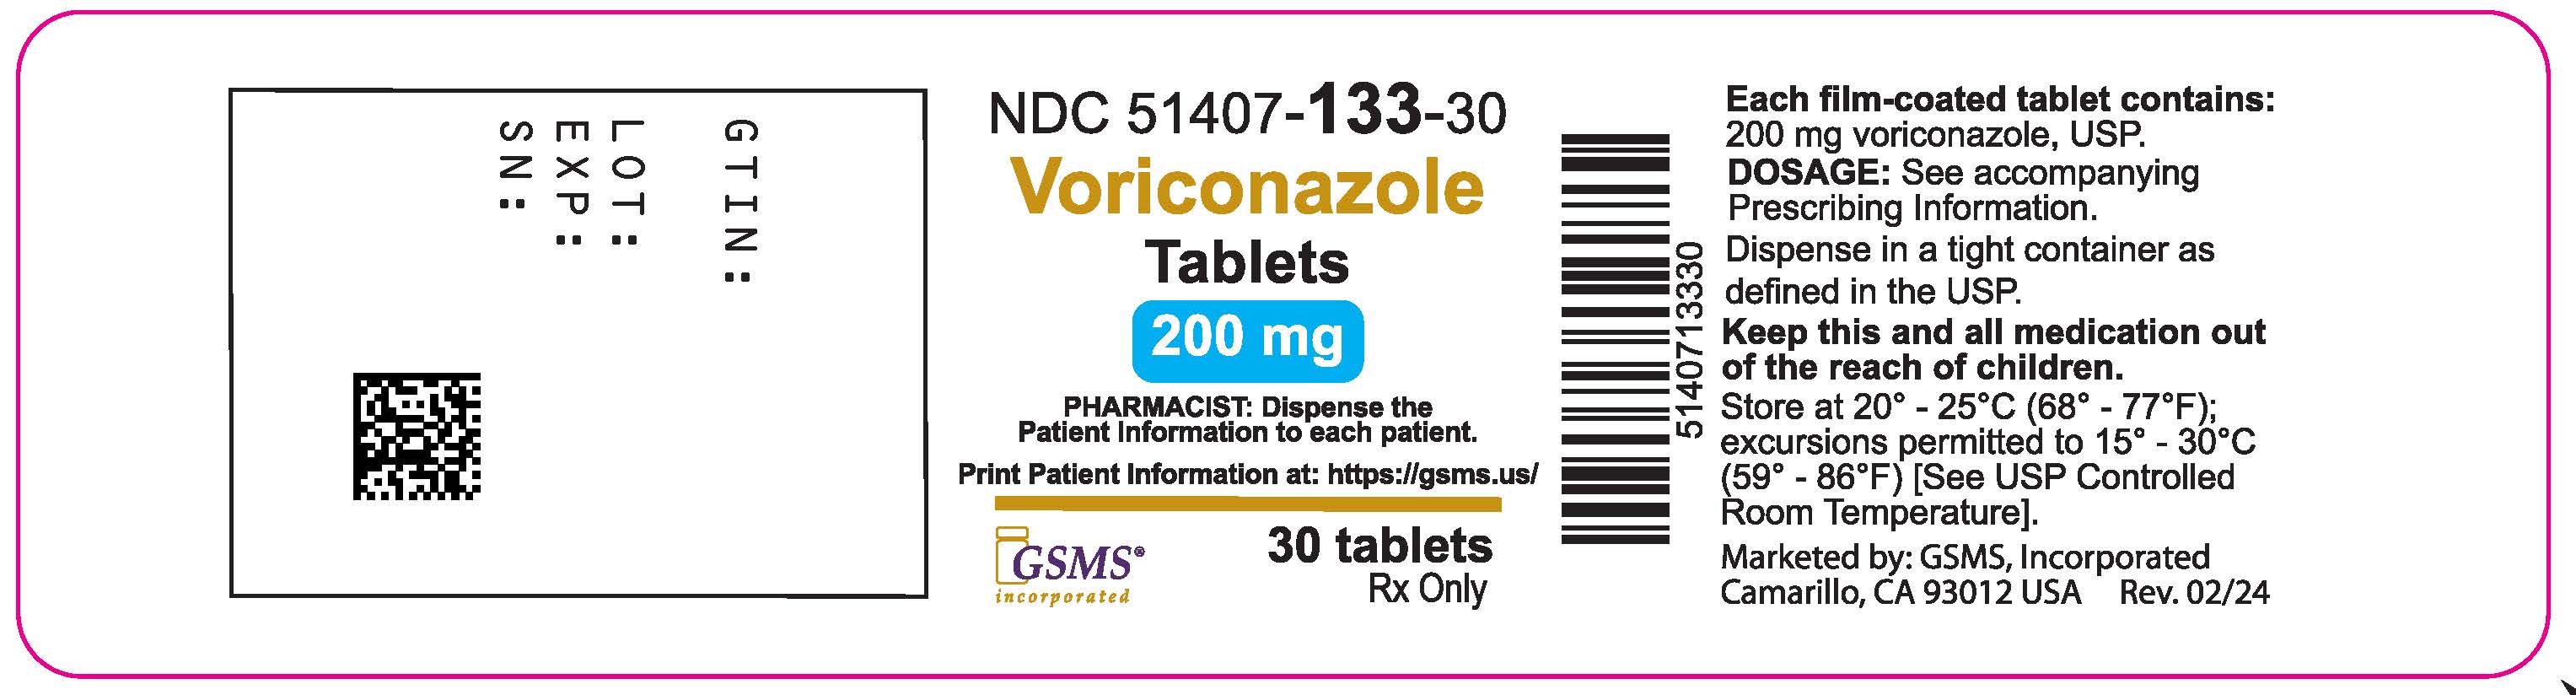 51407-133-30OL - Voriconazole 200 mg - Rev. 0224.jpg